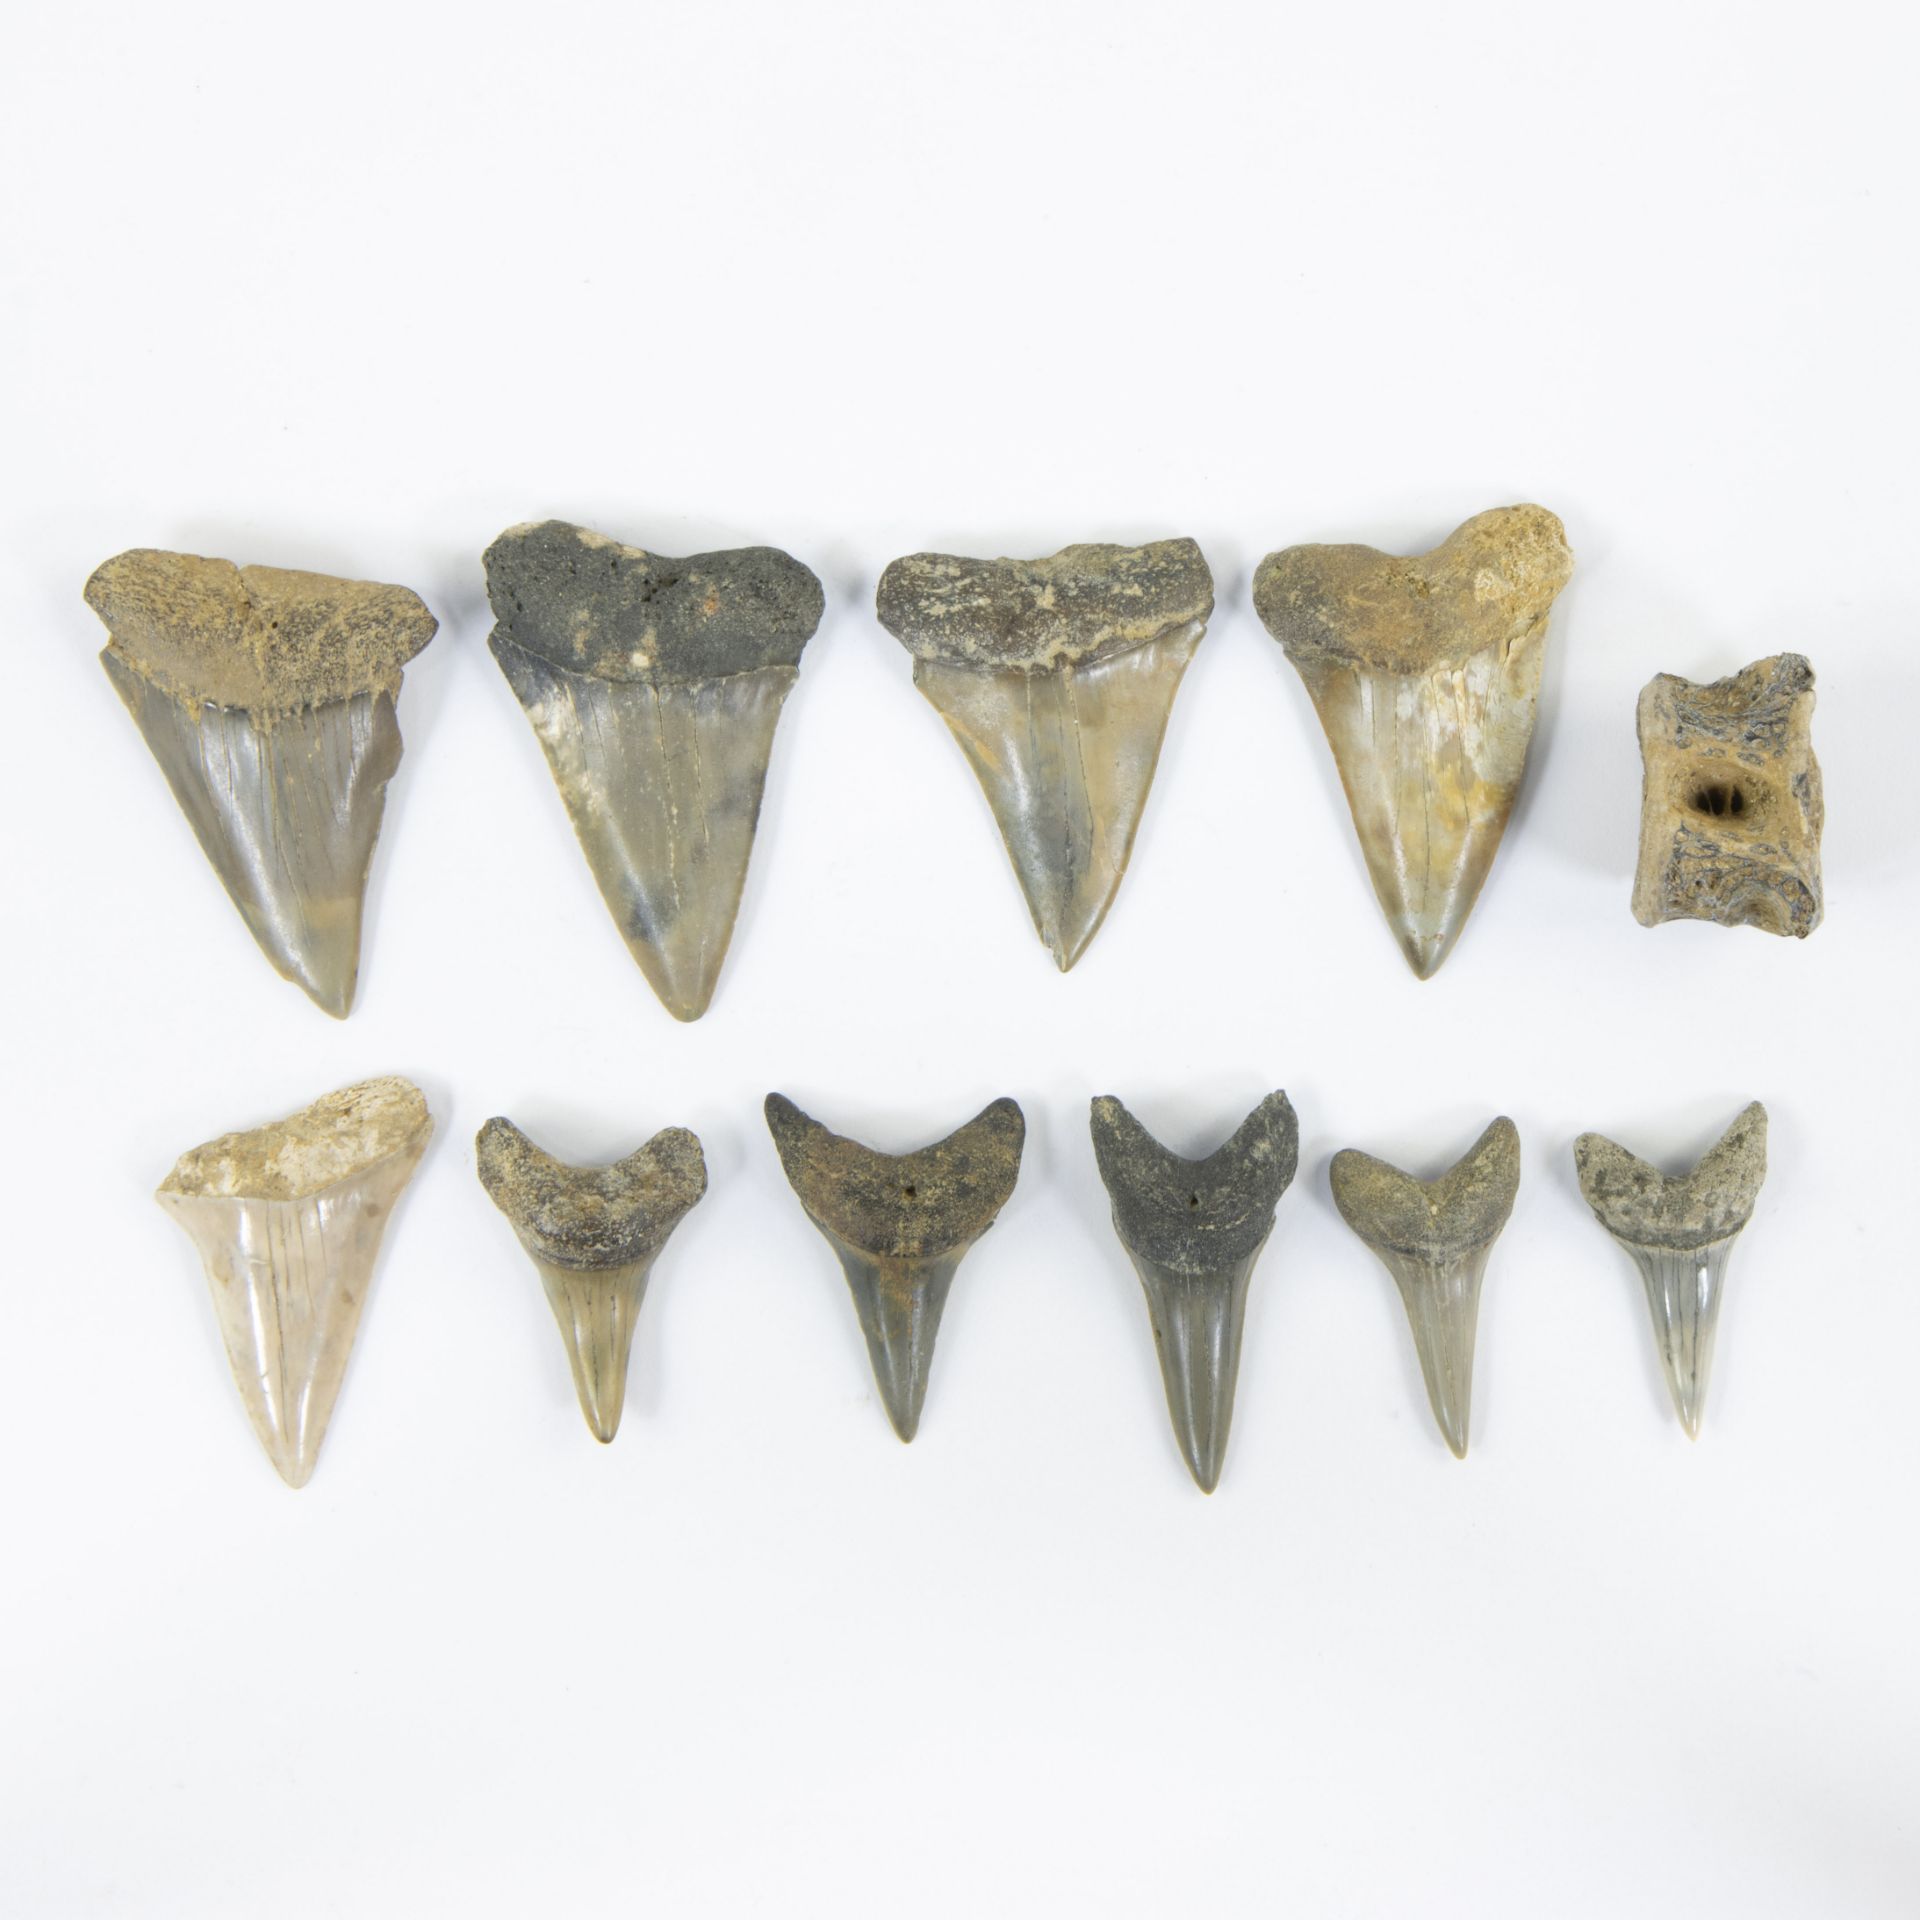 Collection of shark teeth + small vertebra of a predatory fish